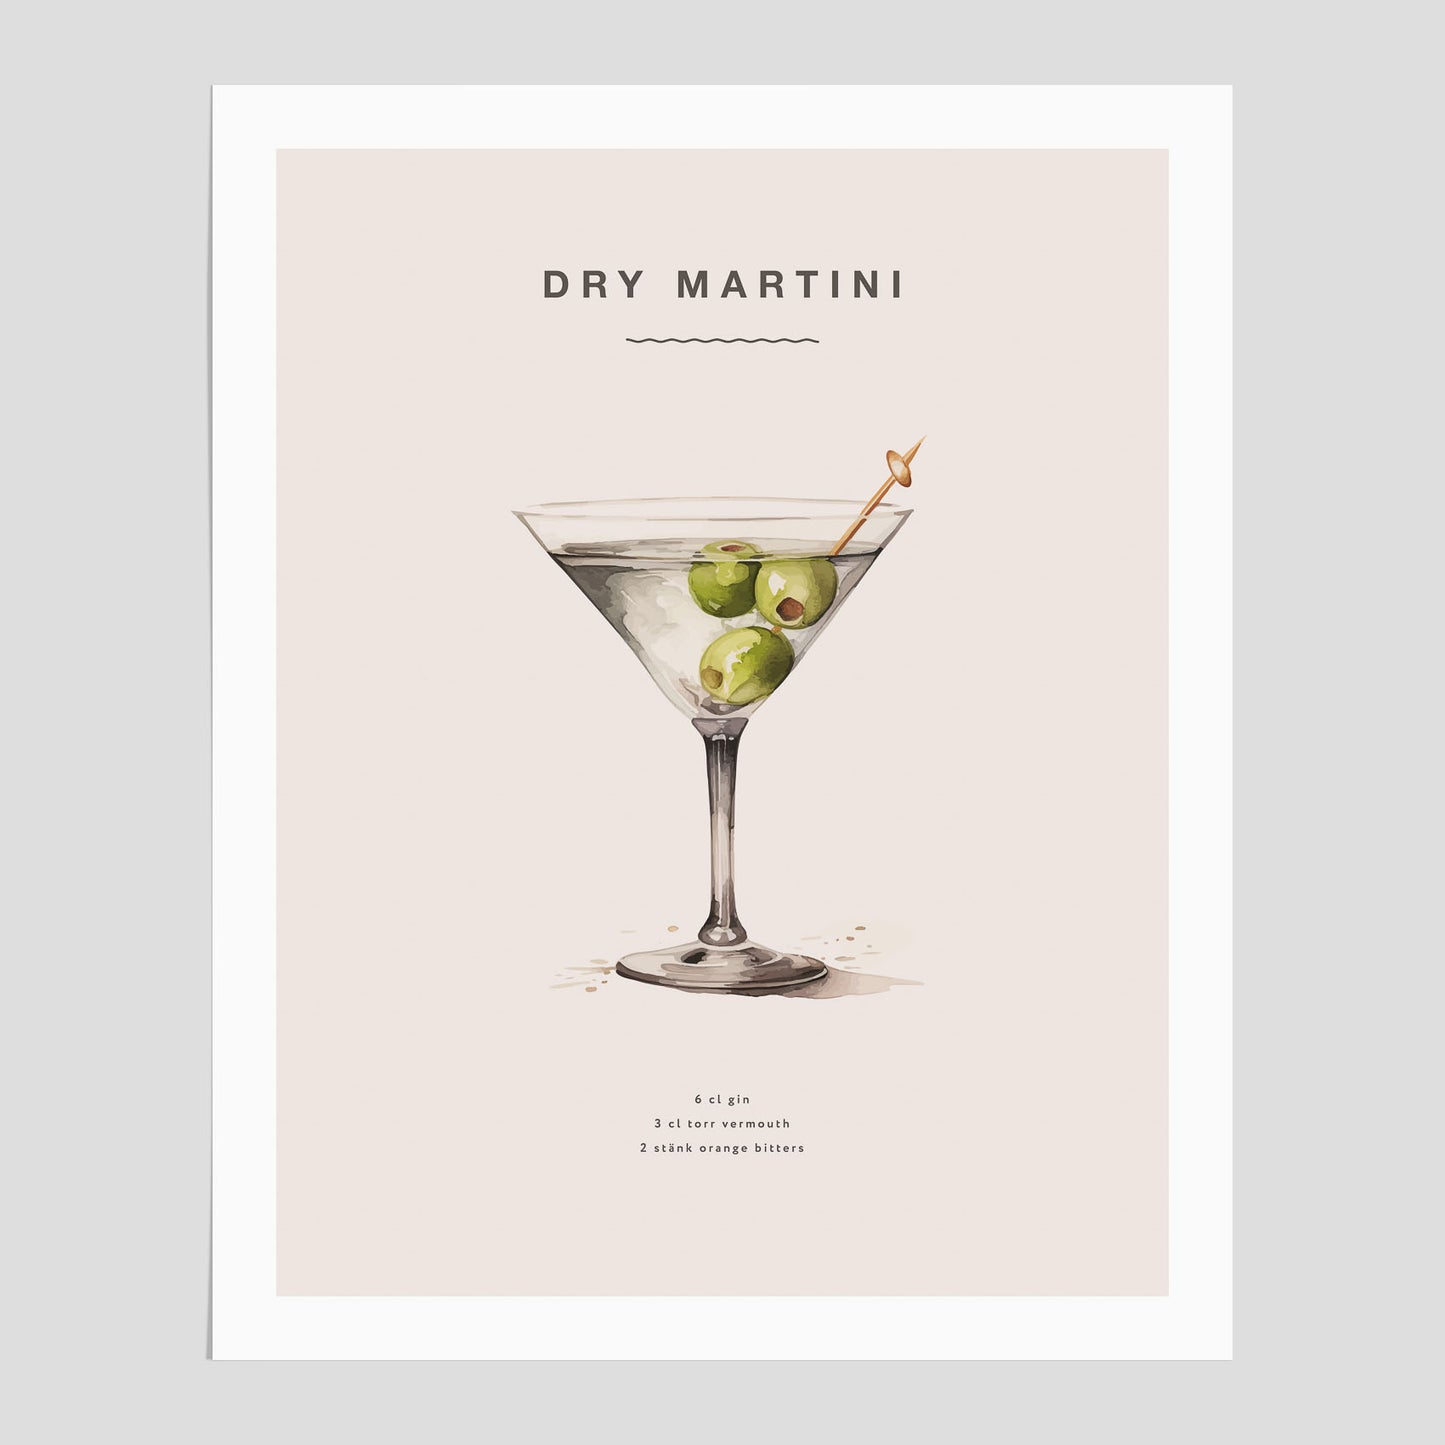 Dry Martini Poster – Affisch med drink, drinkposter med cocktail, Dry Martini recept poster